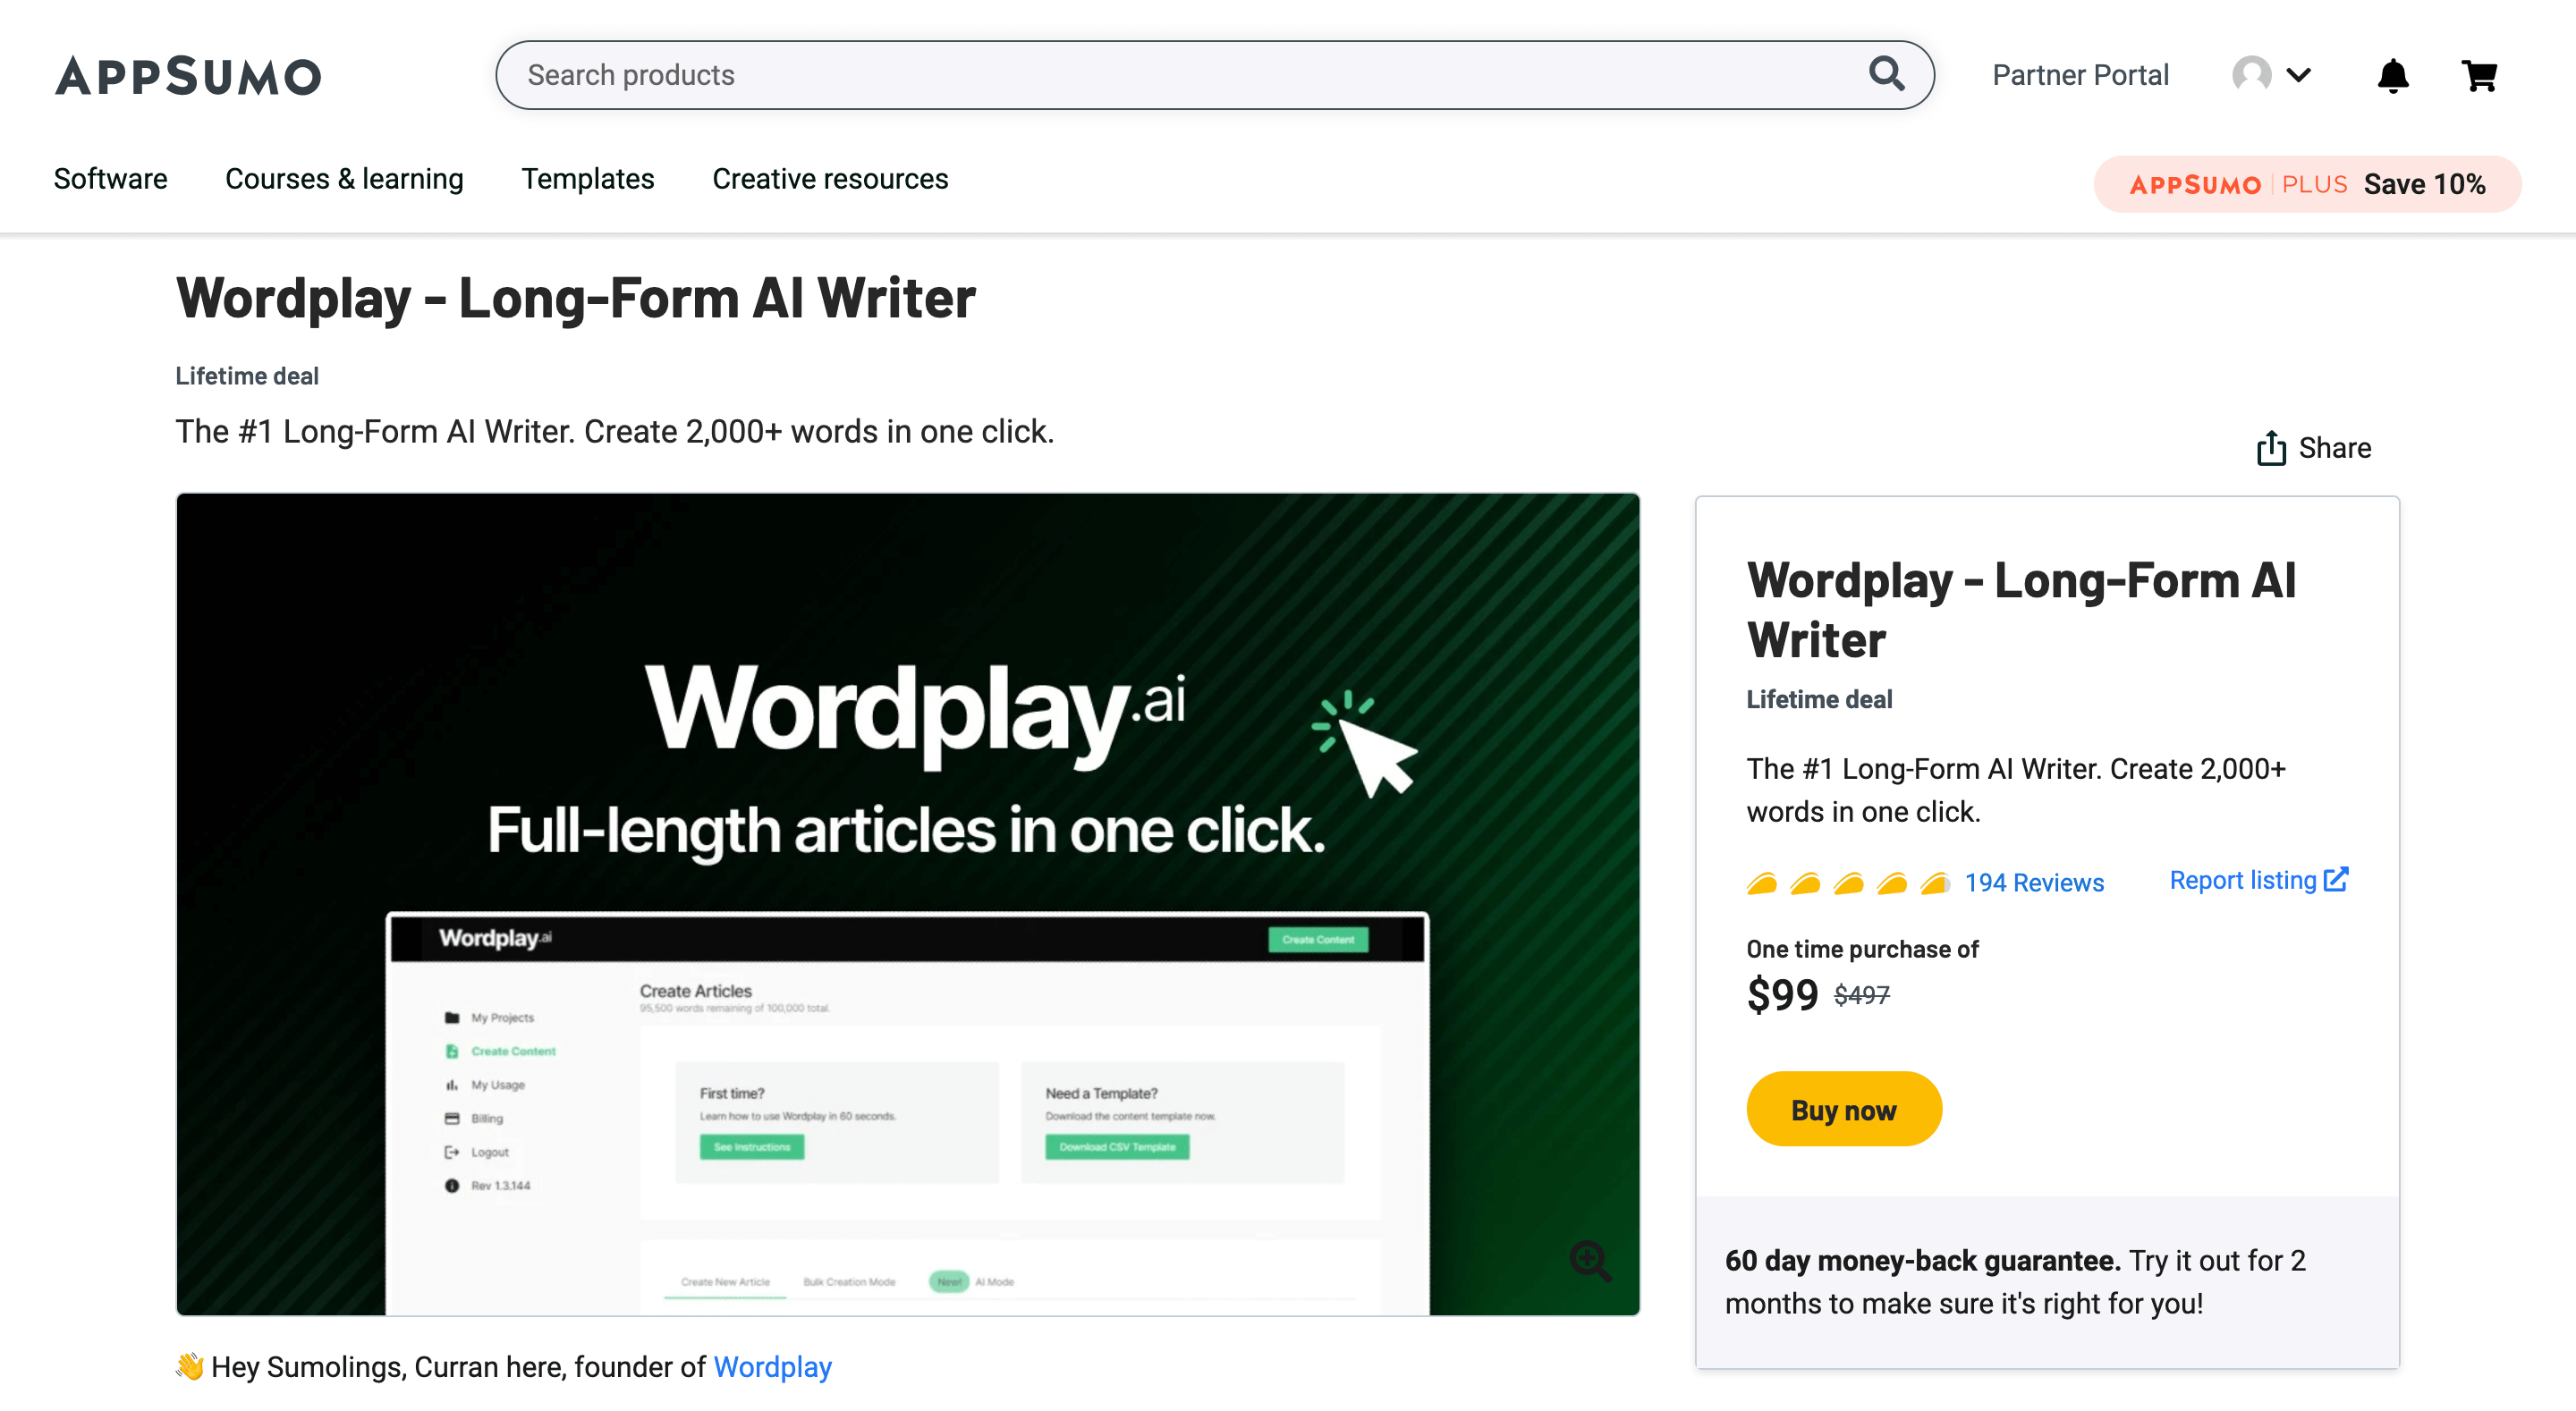 Wordplay - Long-Form AI Writer